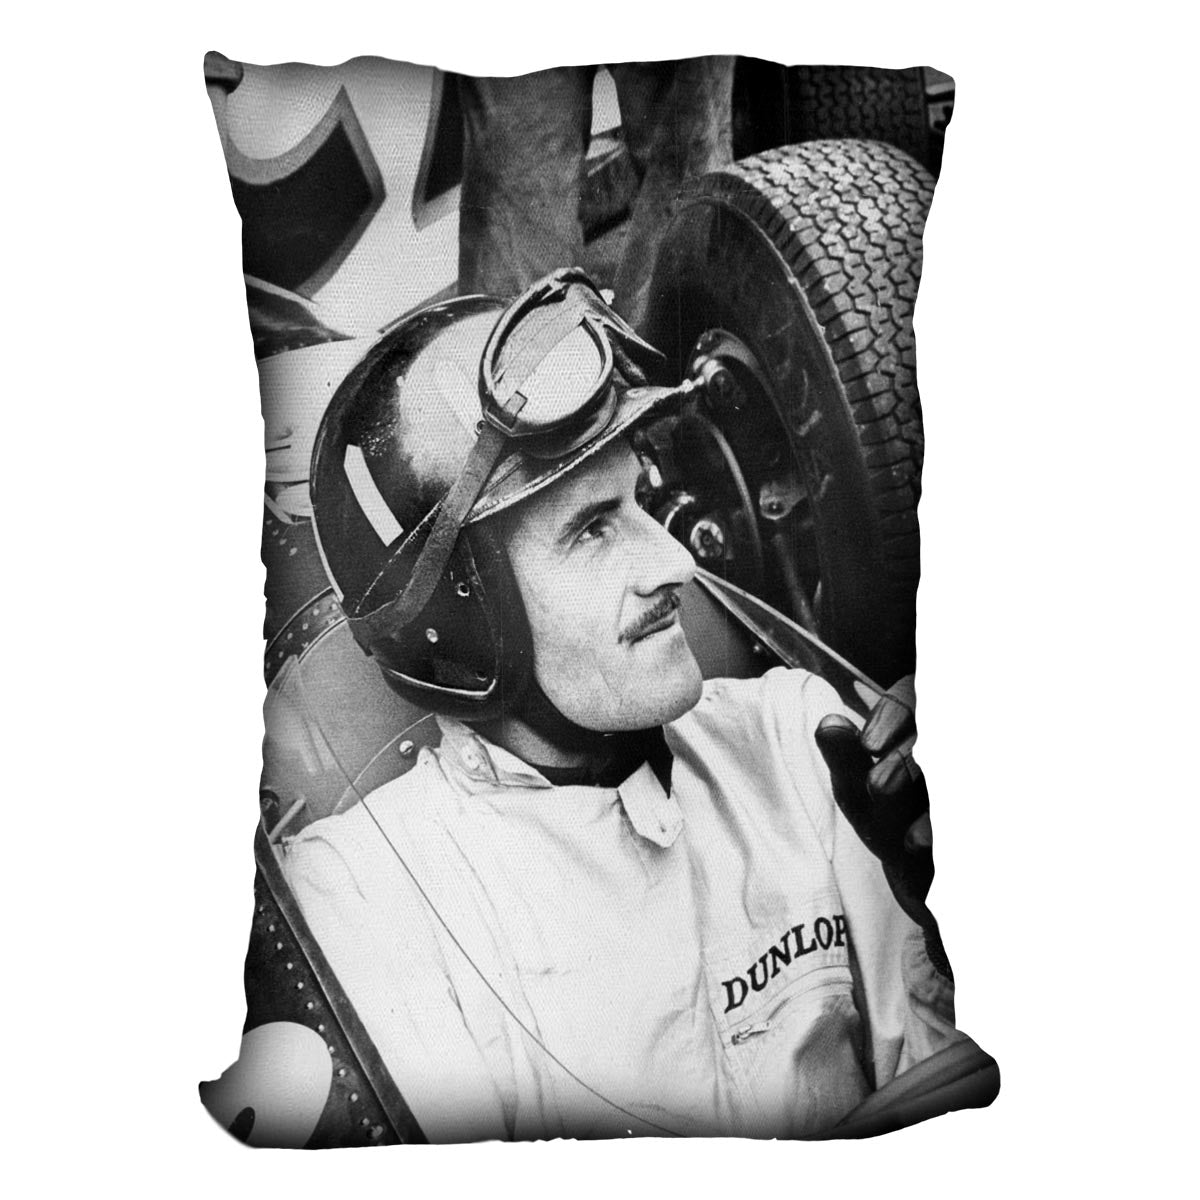 Racing driver Graham Hill Cushion